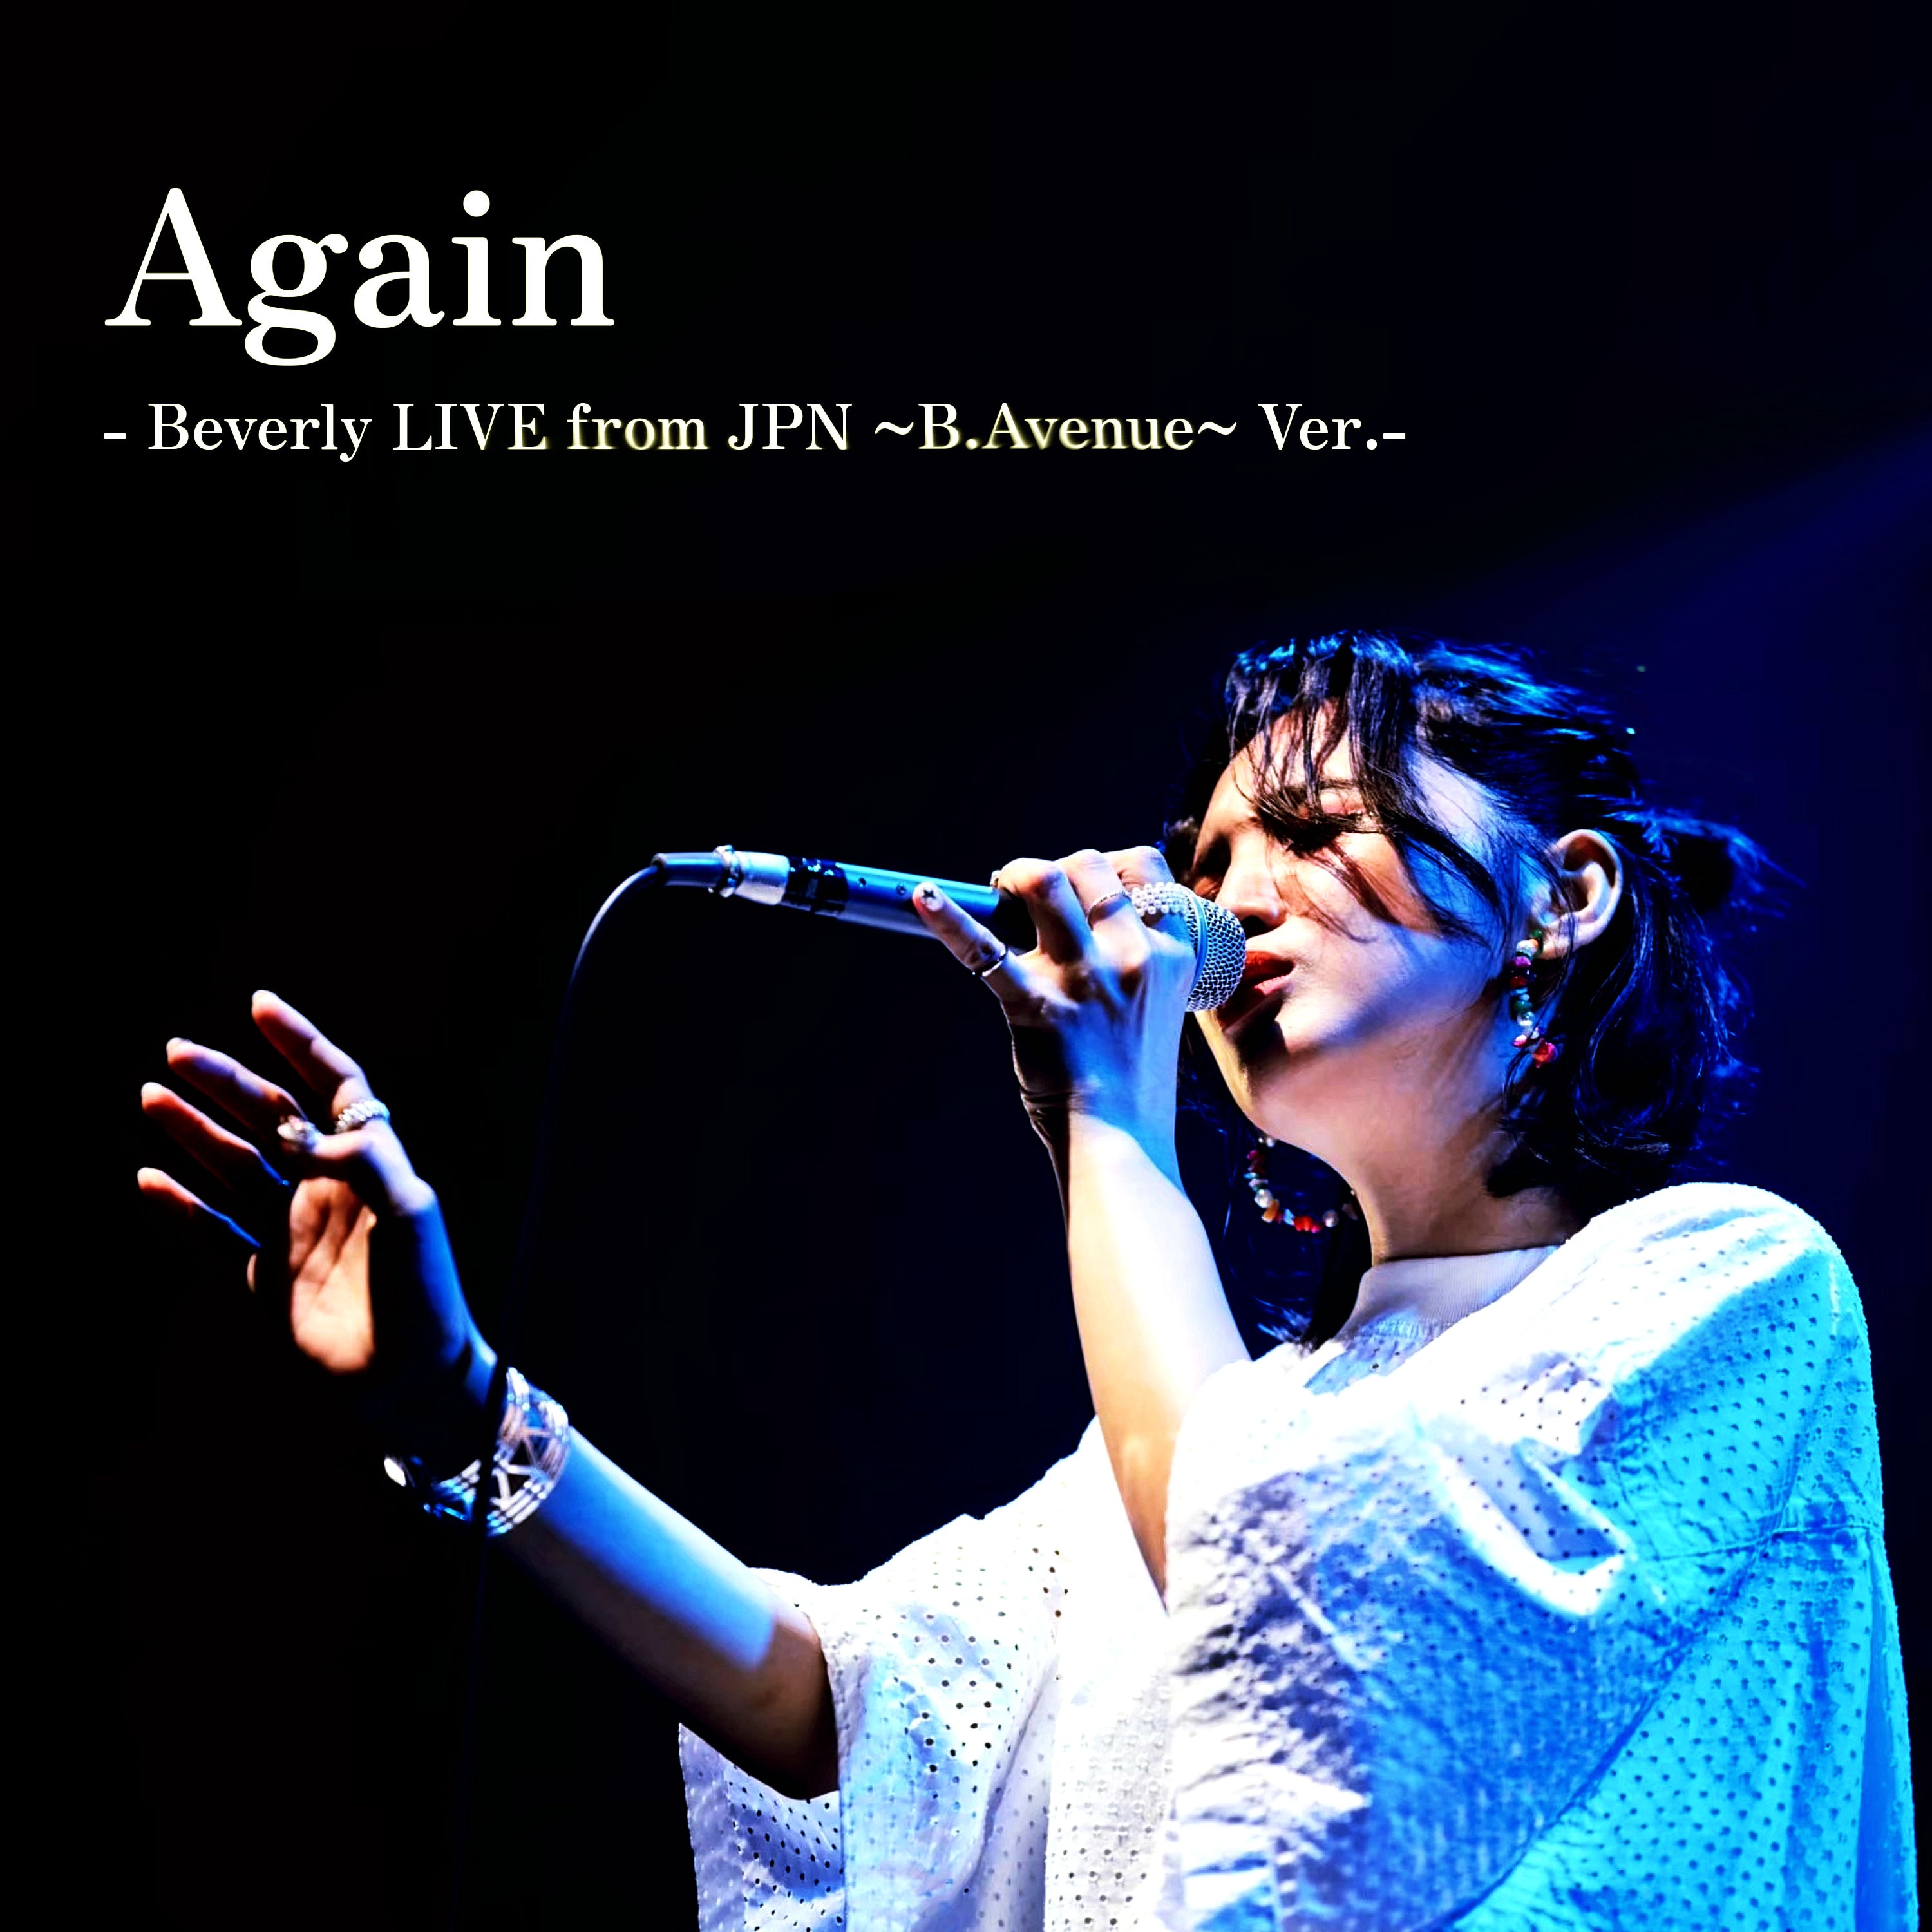 Again - Beverly LIVE from JPN ~B.Avenue~ Ver. -